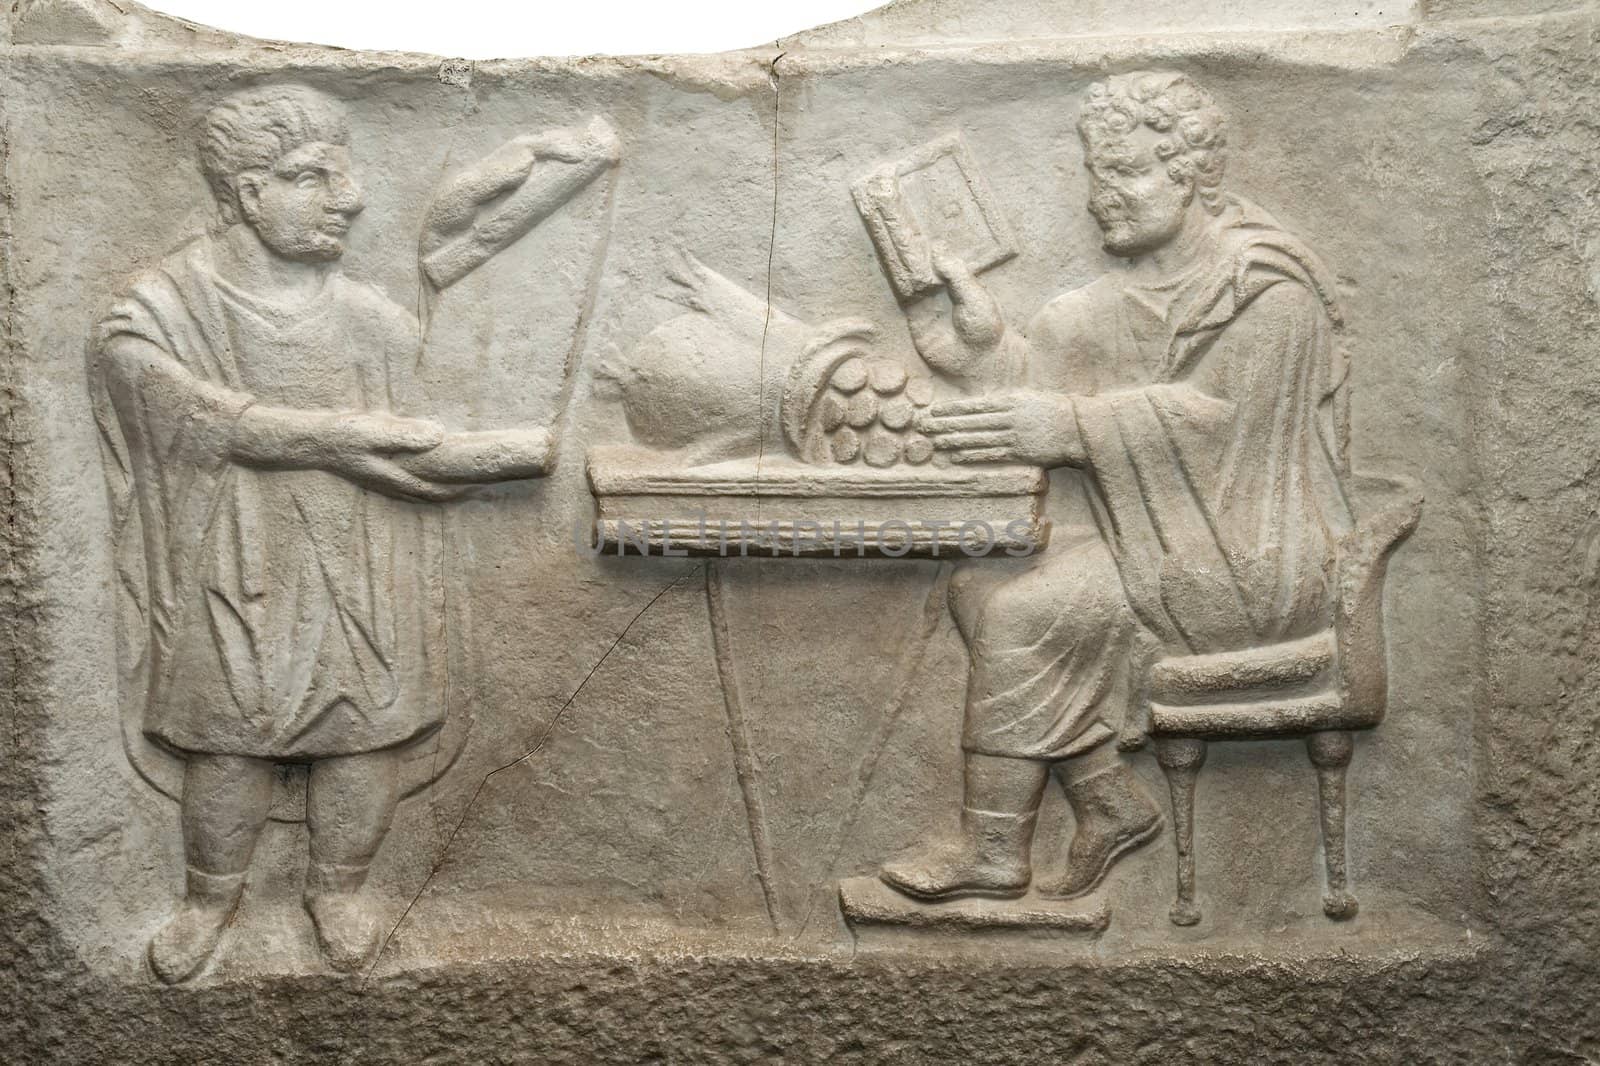 Shop moneychangers. The Roman bas-relief. Ancient financial transactions